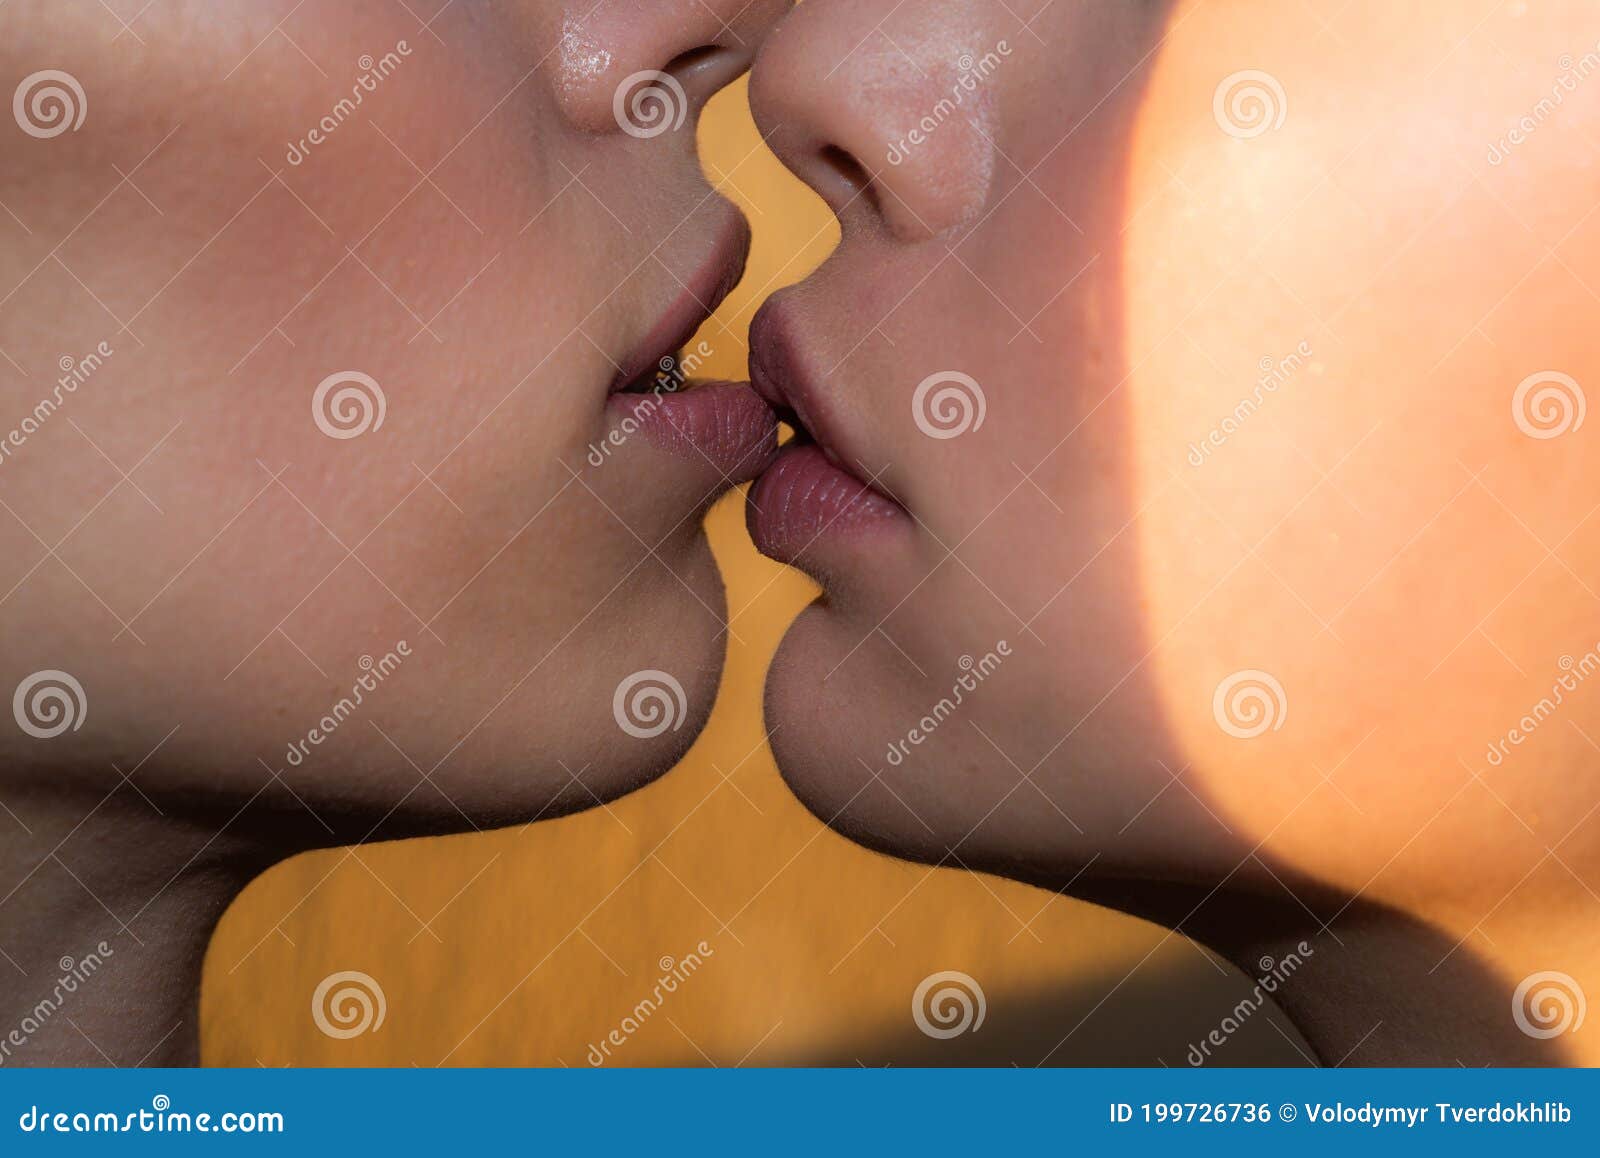 brazilian girls tongue kissing nude gallery pic